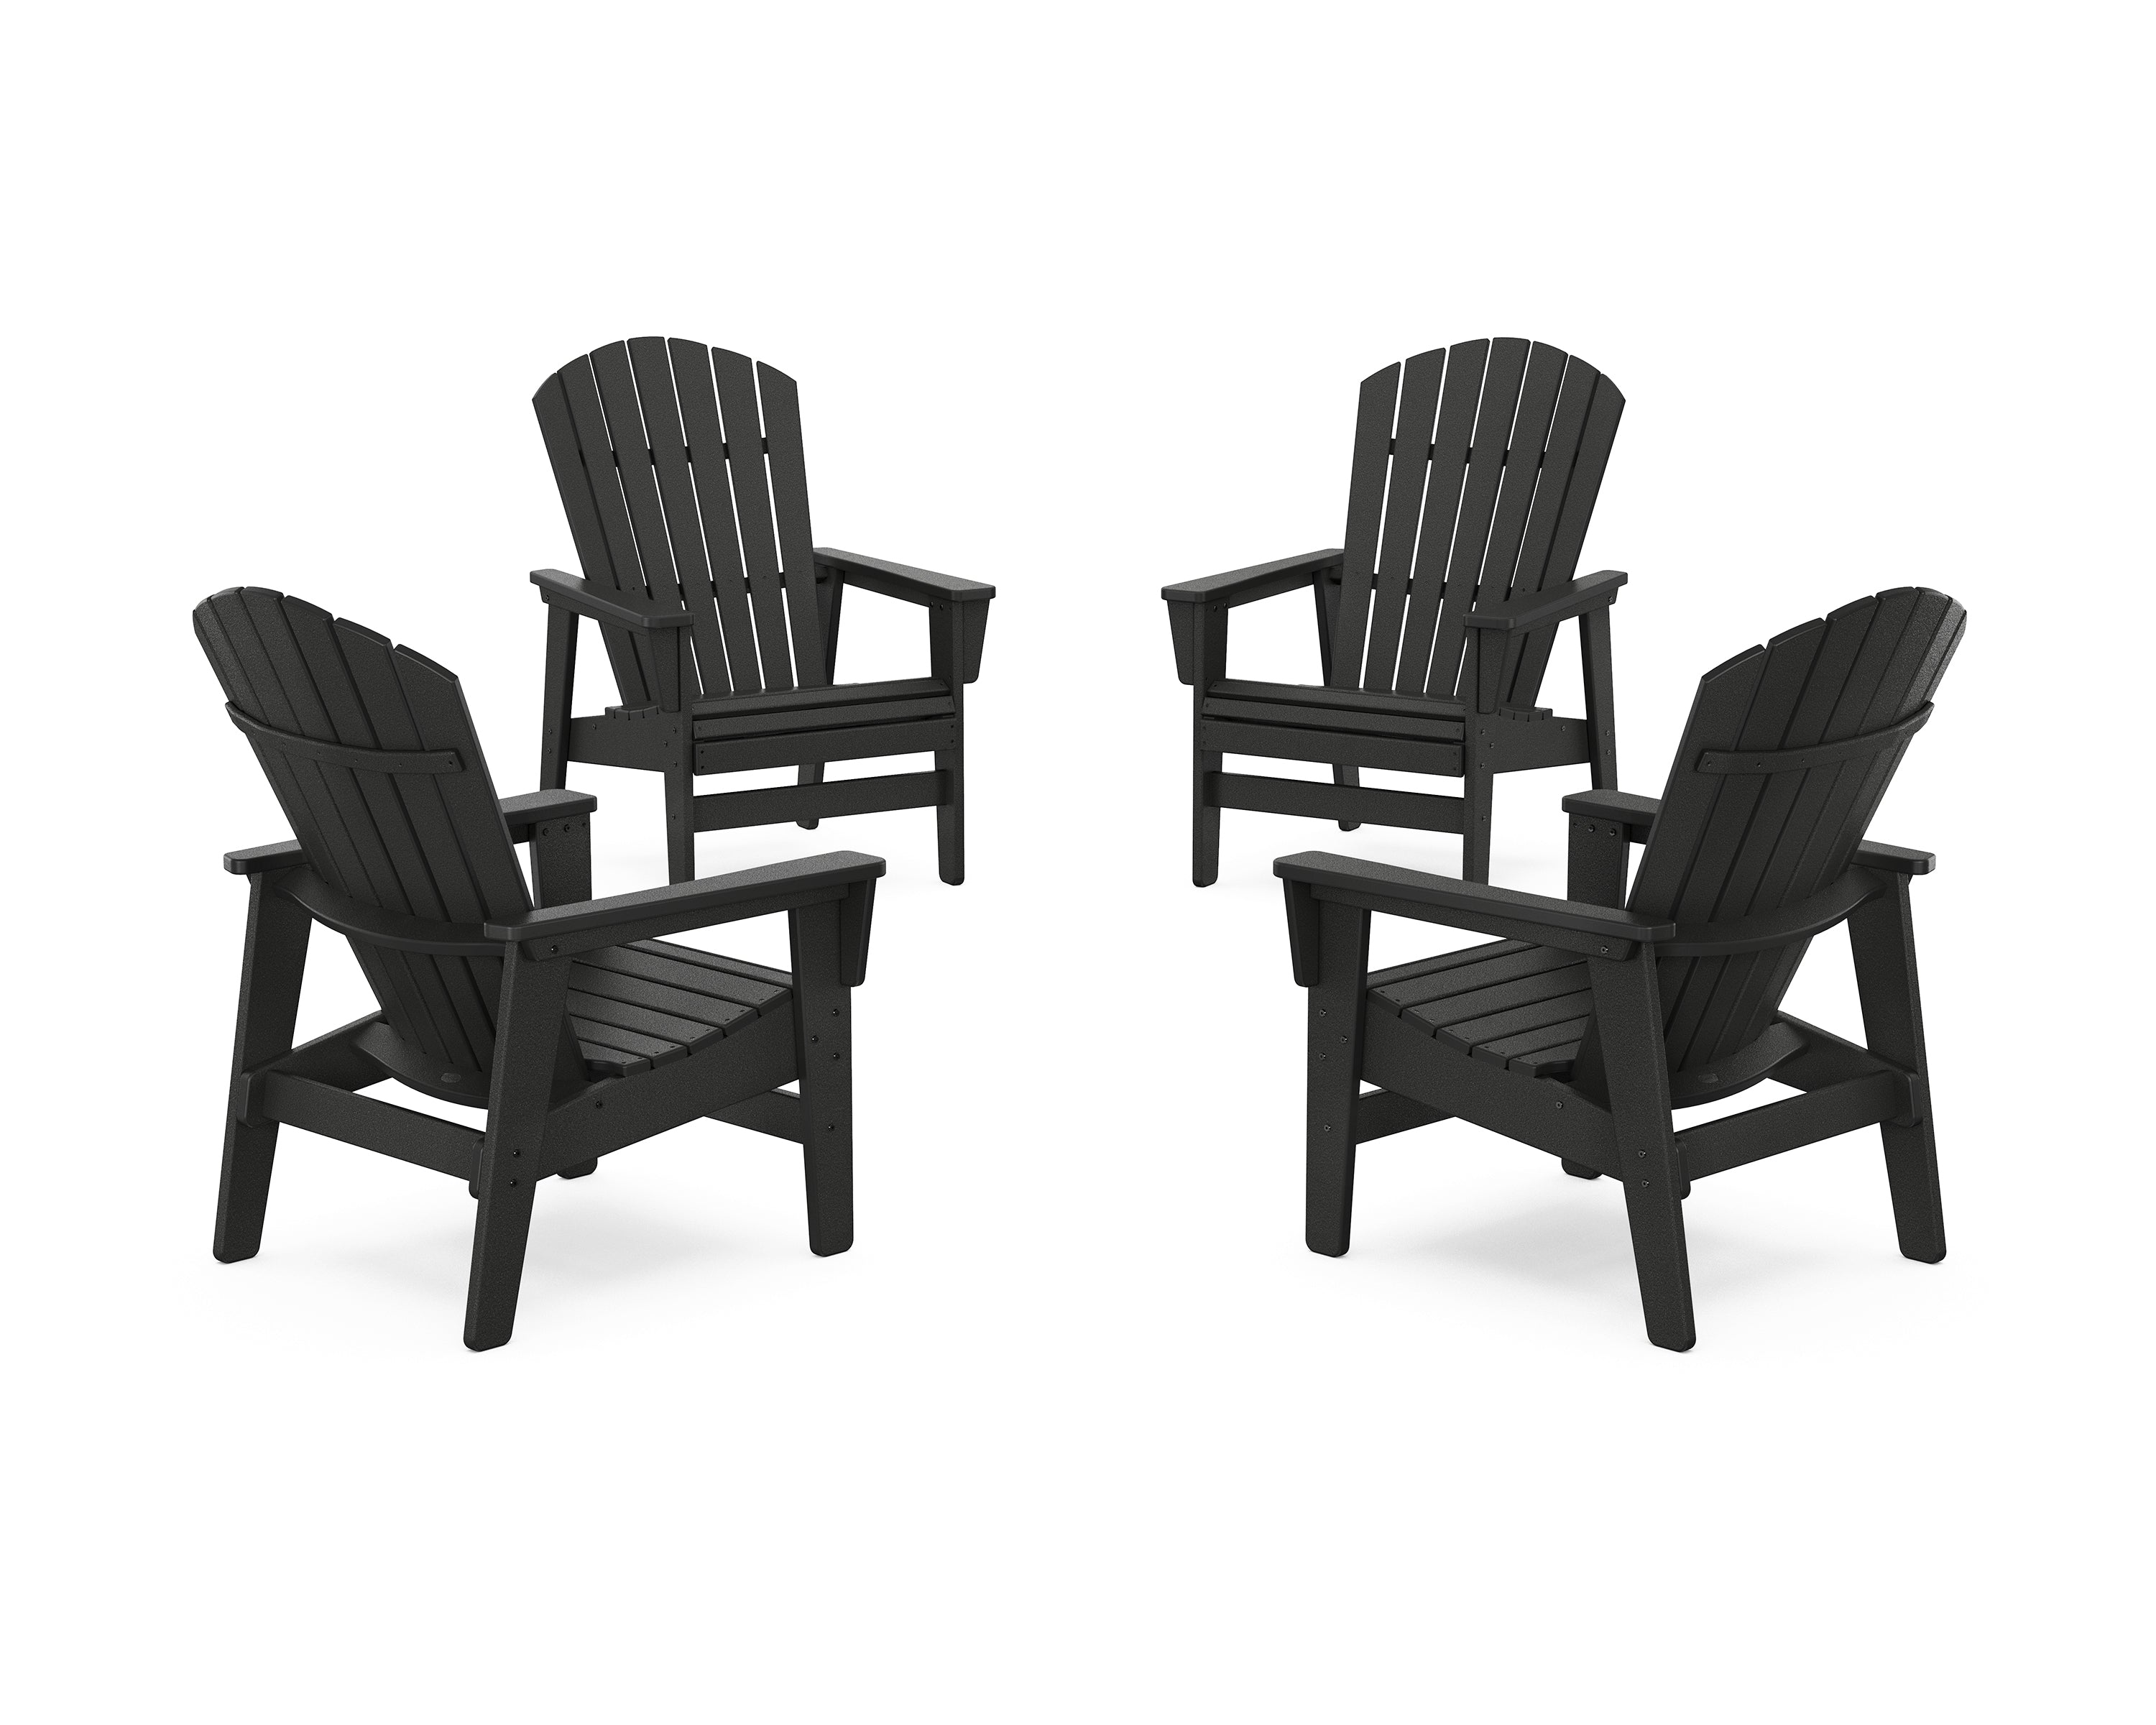 POLYWOOD® 4-Piece Nautical Grand Upright Adirondack Chair Conversation Set in Black